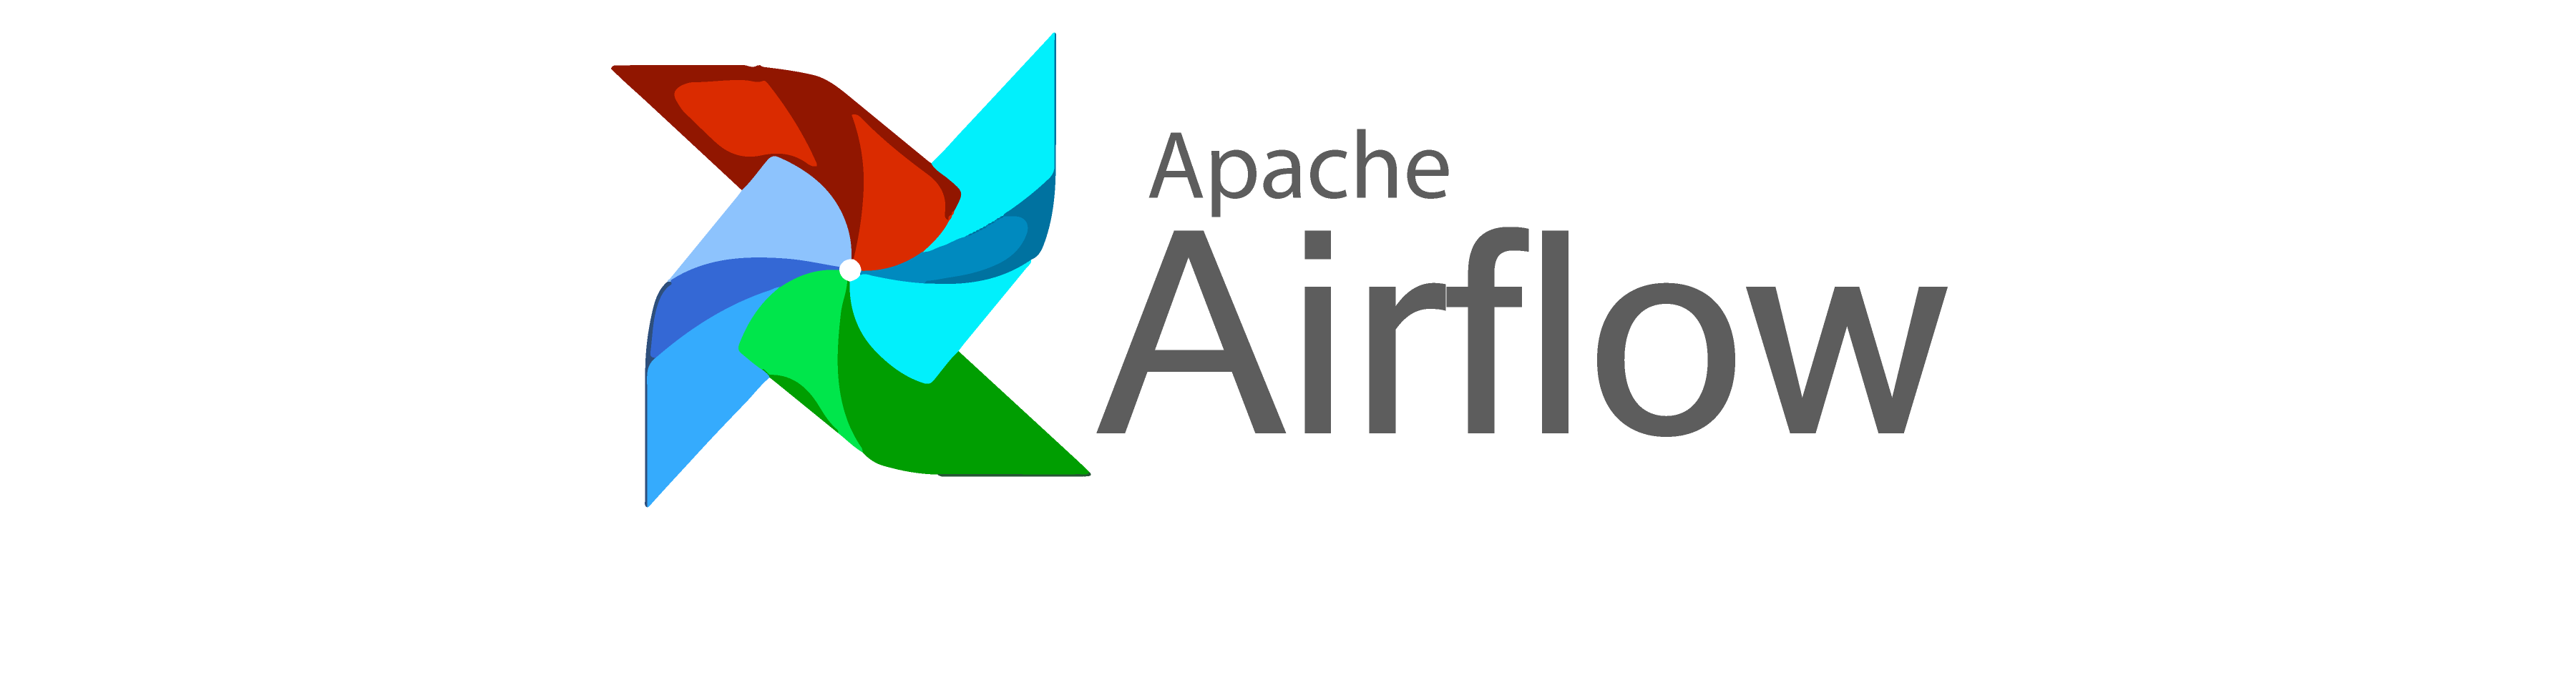 Understanding Apache Airflow's key concepts